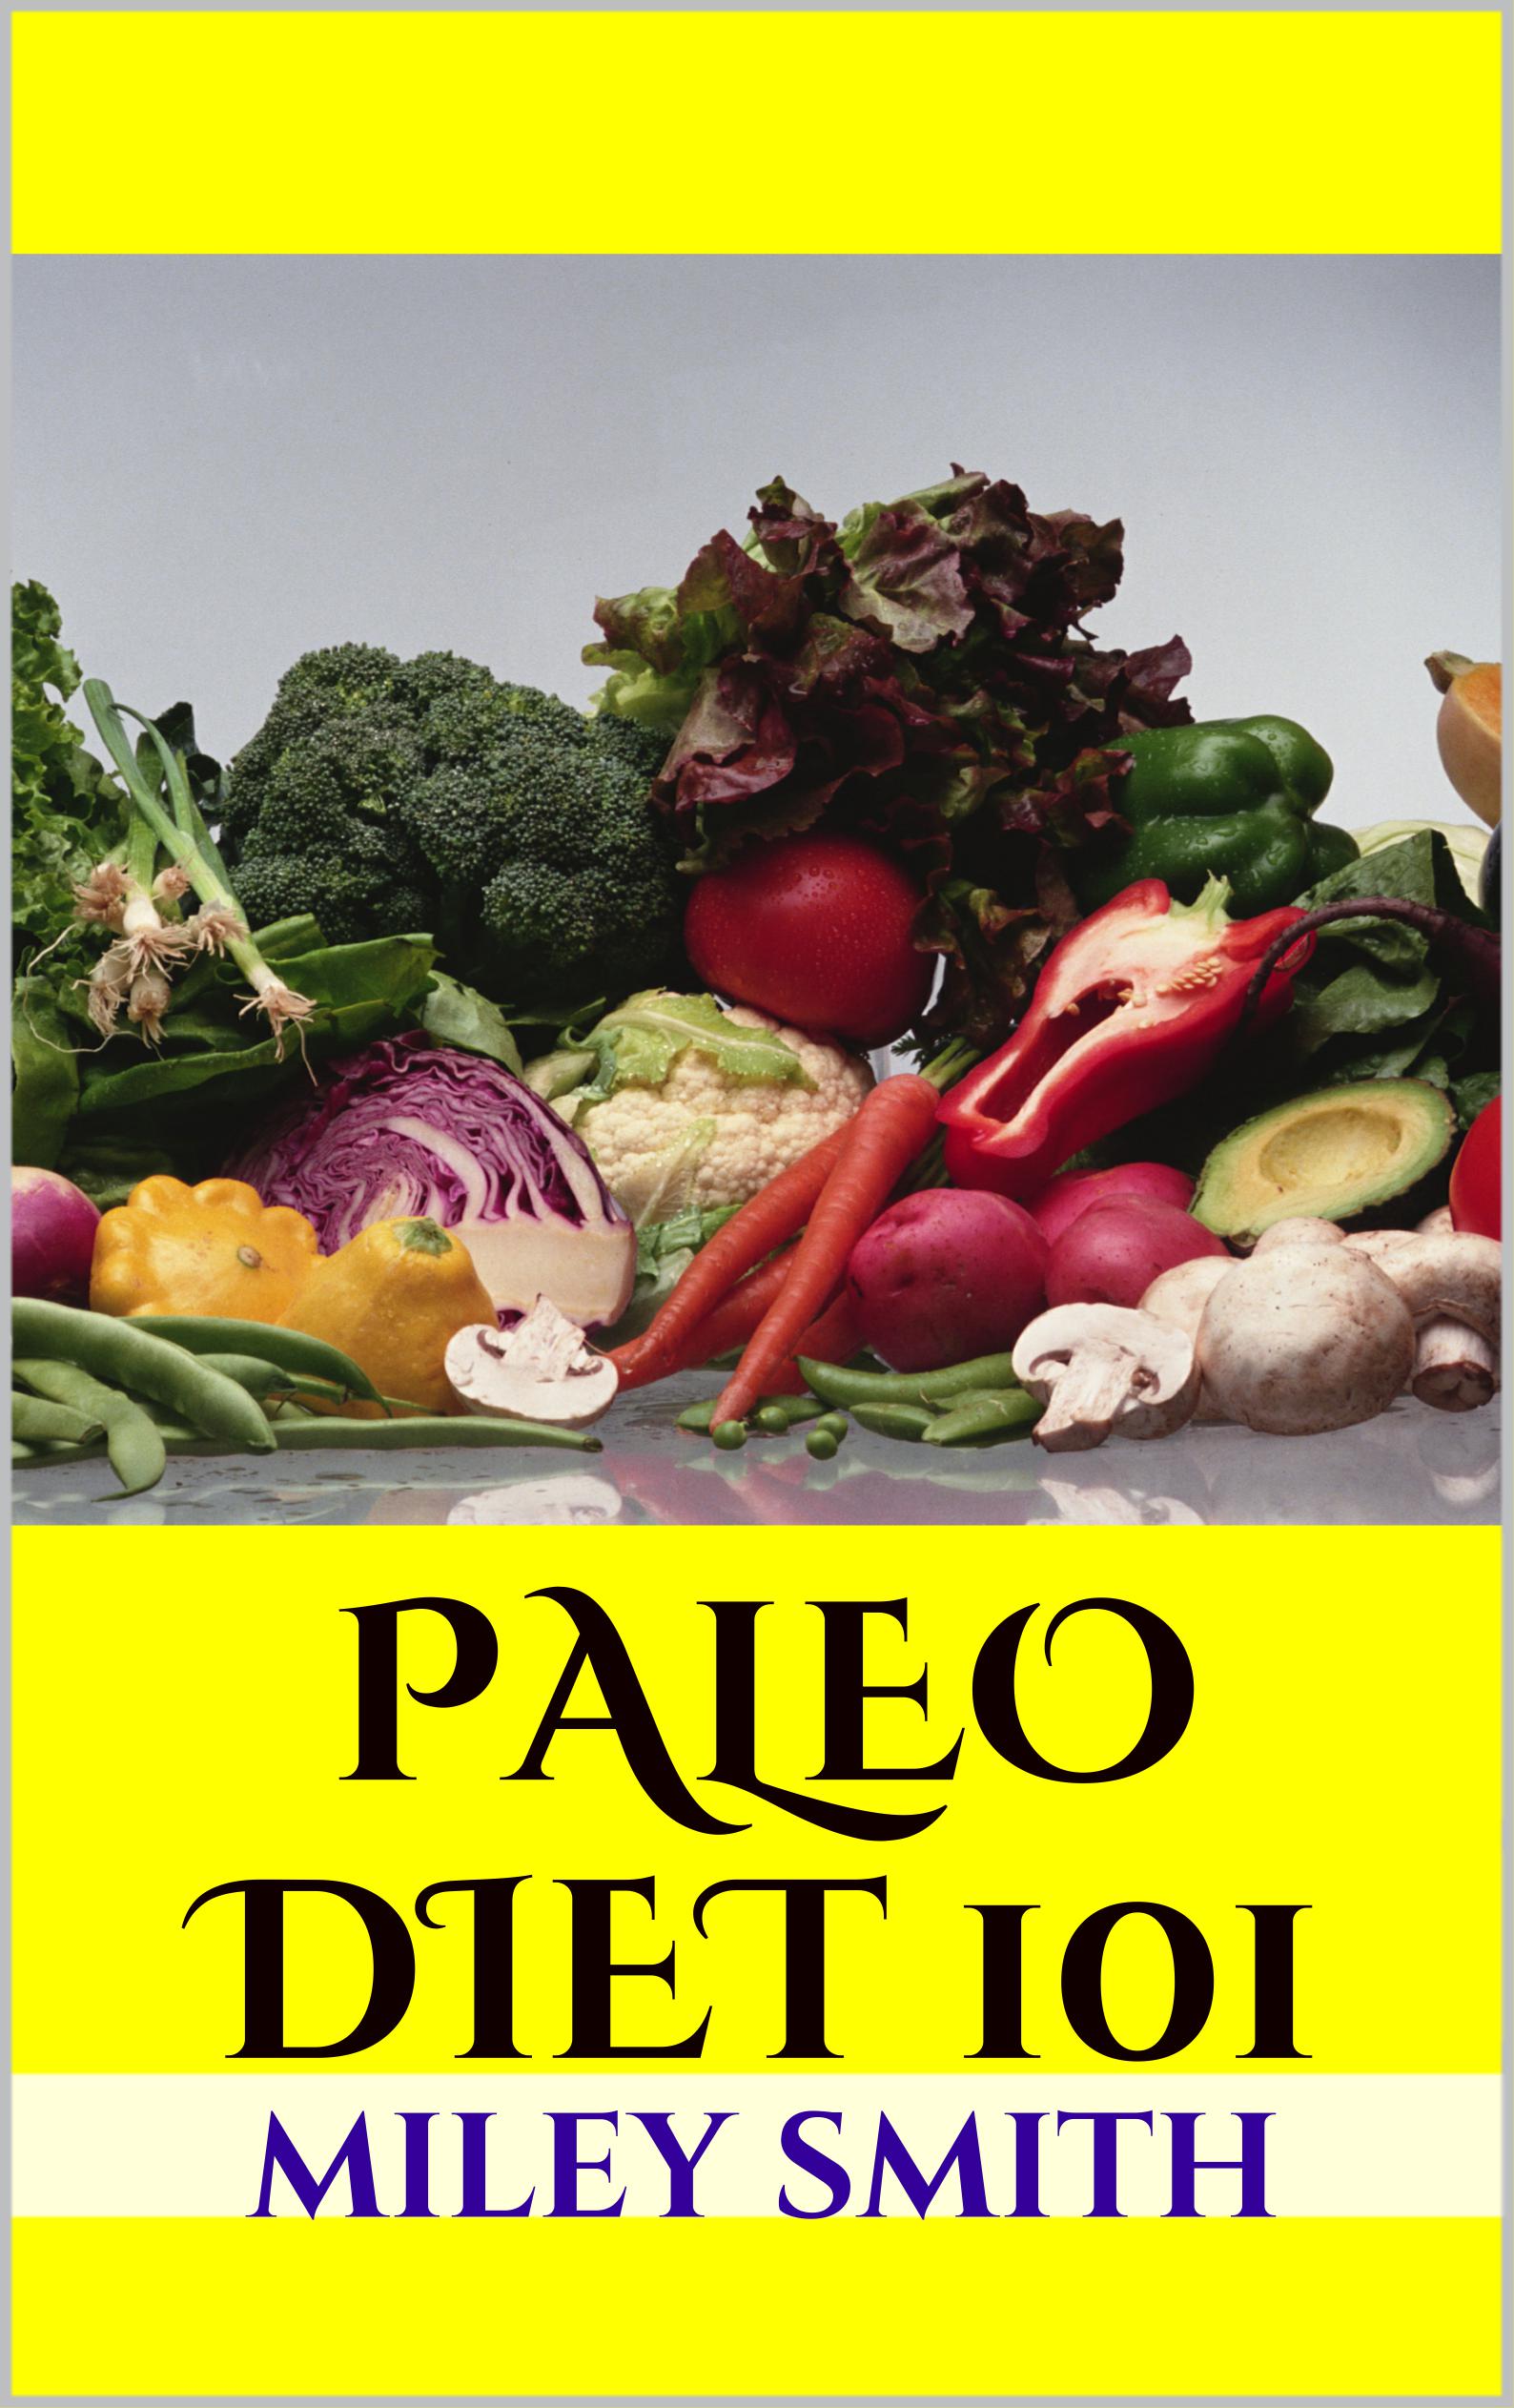 Paleo diet nude — pic 7